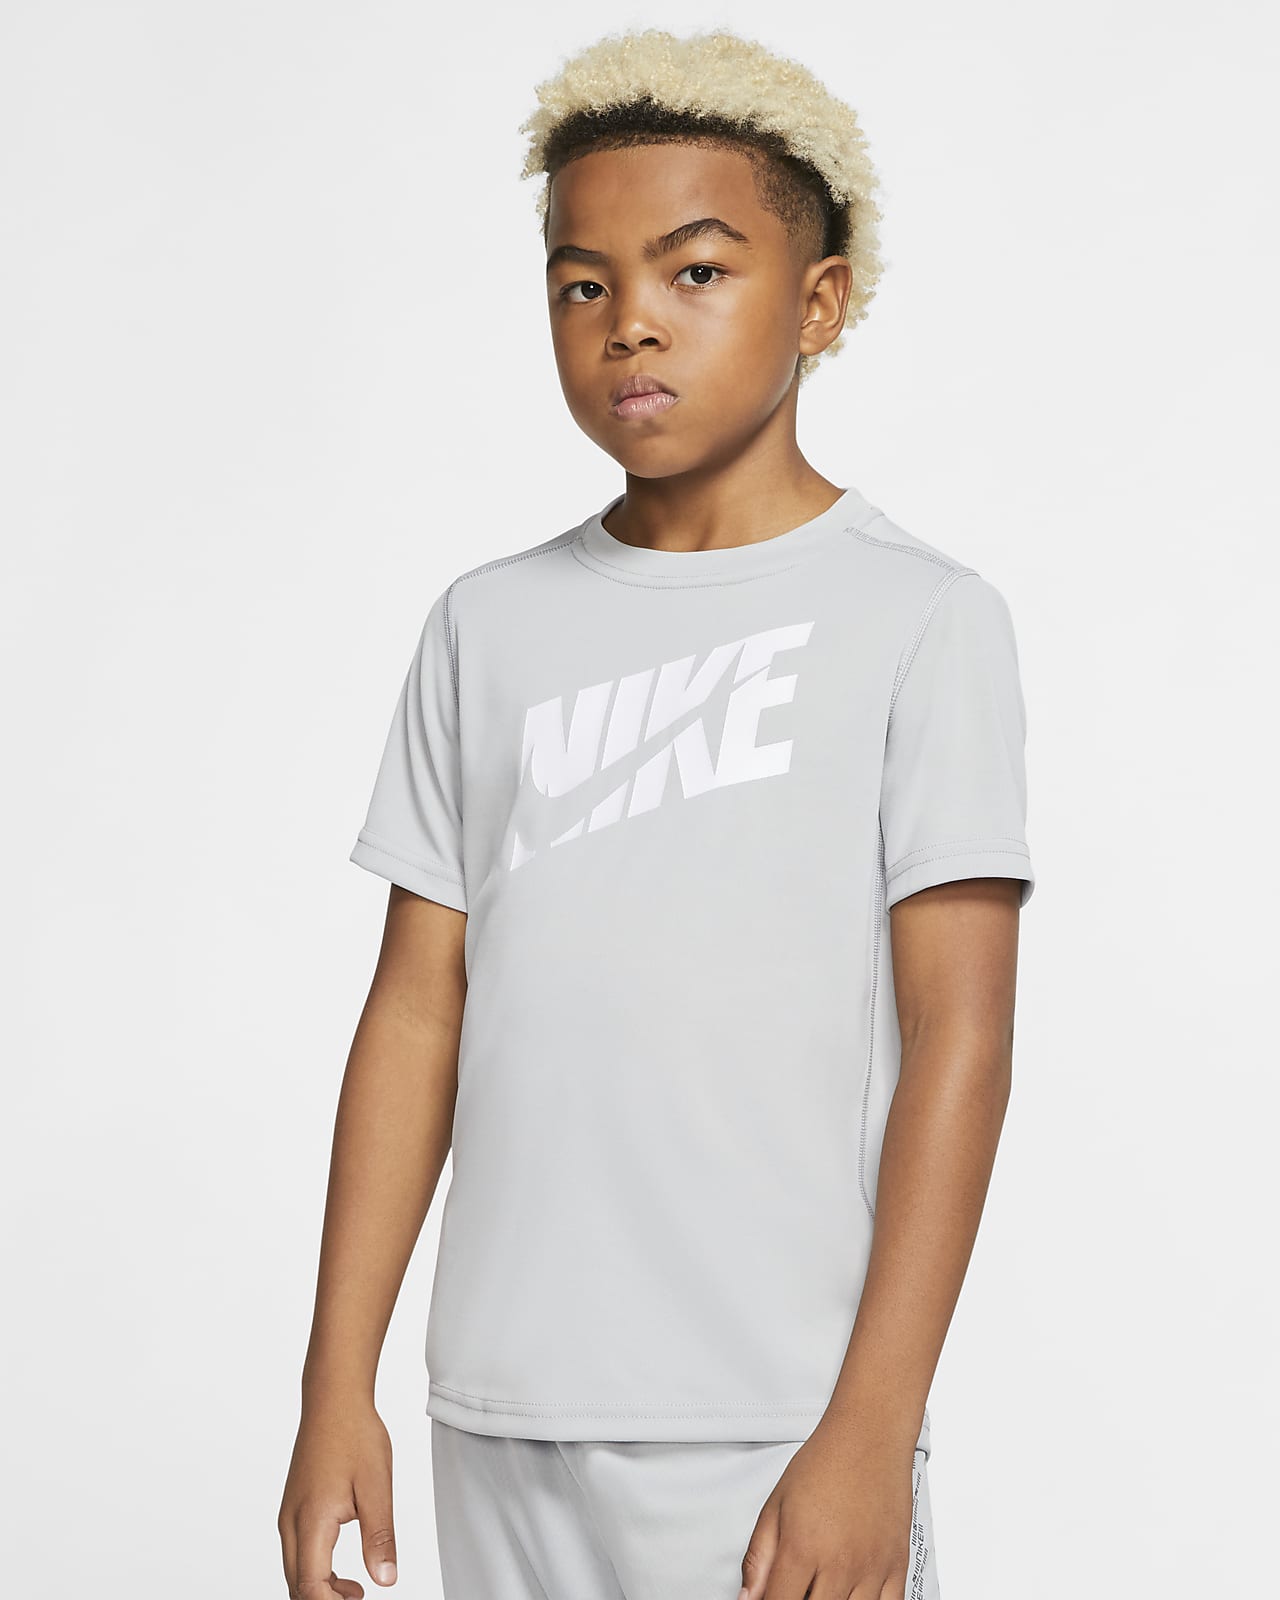 Nike Older Kids' (Boys') Short-Sleeve Training Top